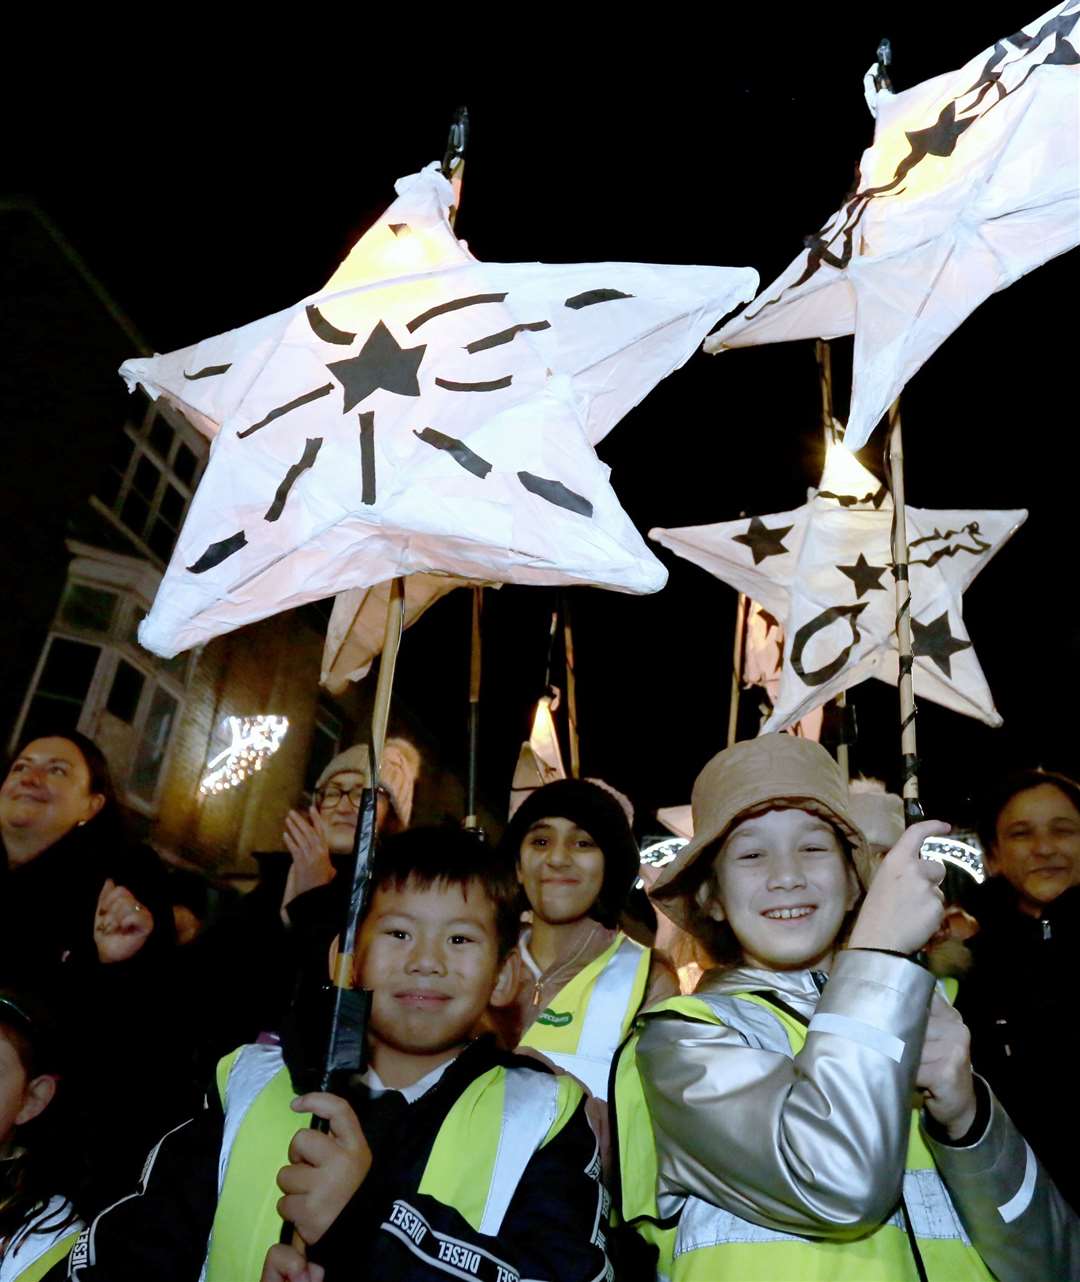 School children will lead the lantern parade